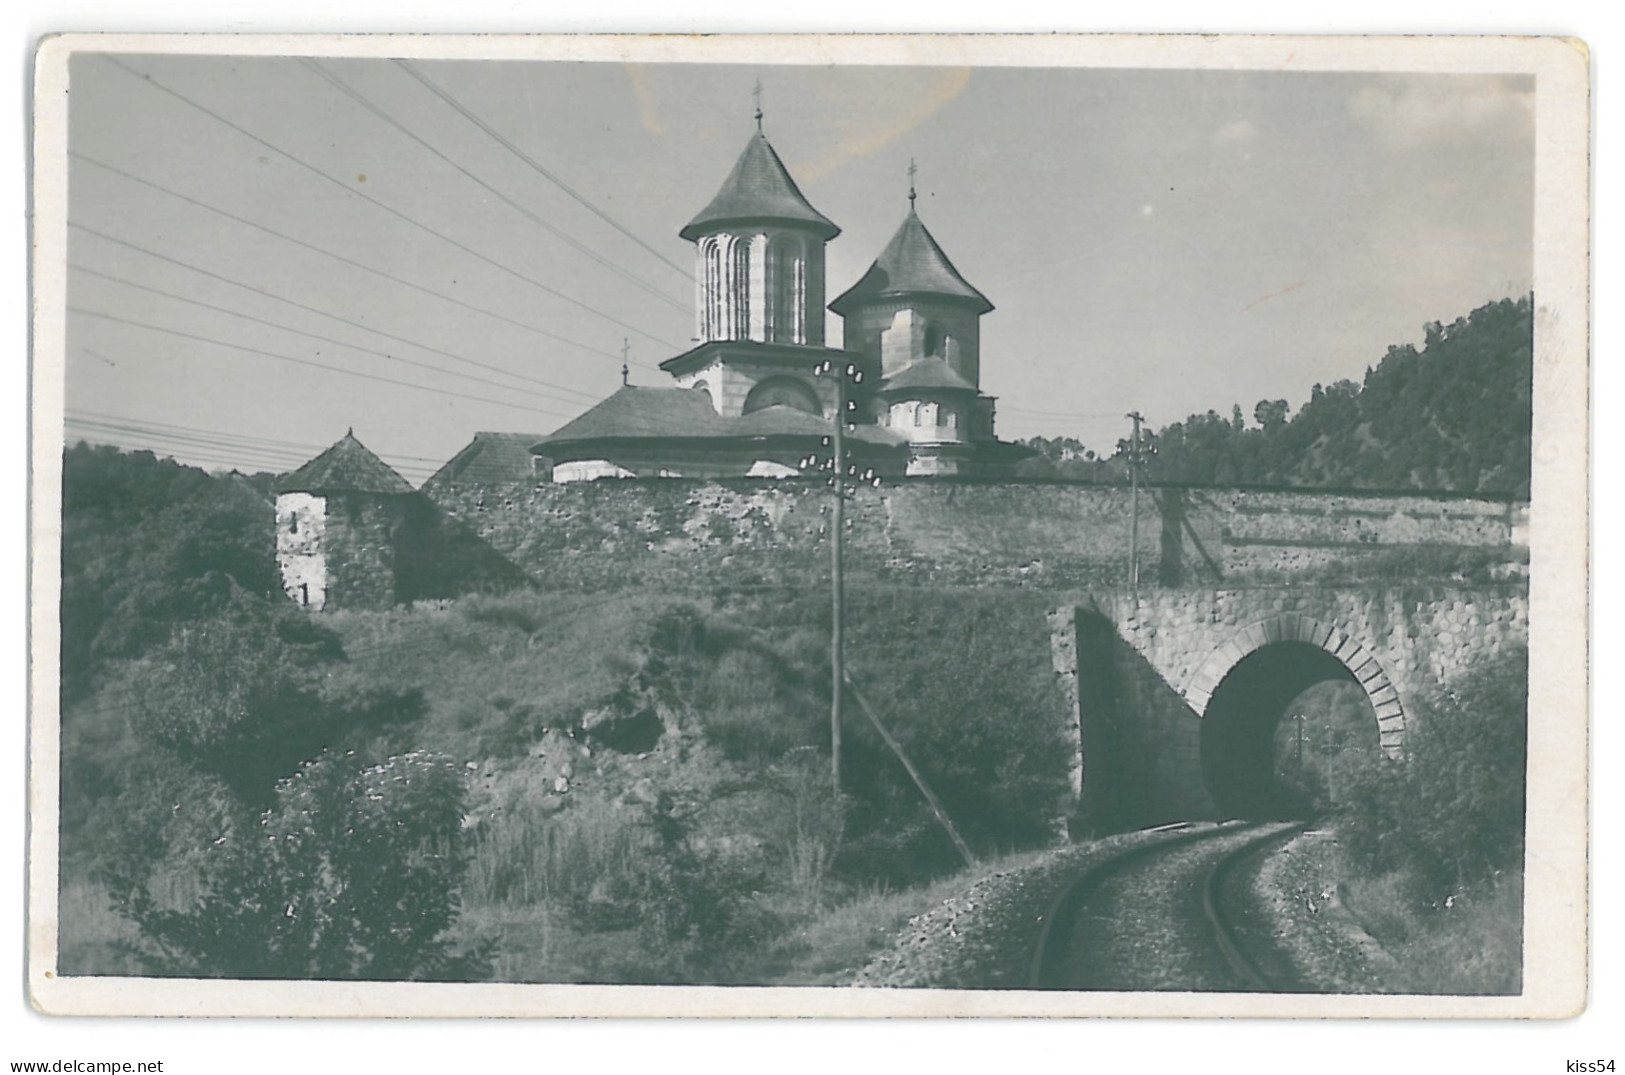 RO 79 - 12703 CORNET, Valcea, Tunnel Railway, Monastery, Romania - Old Postcard, Real PHOTO - Unused - Romania